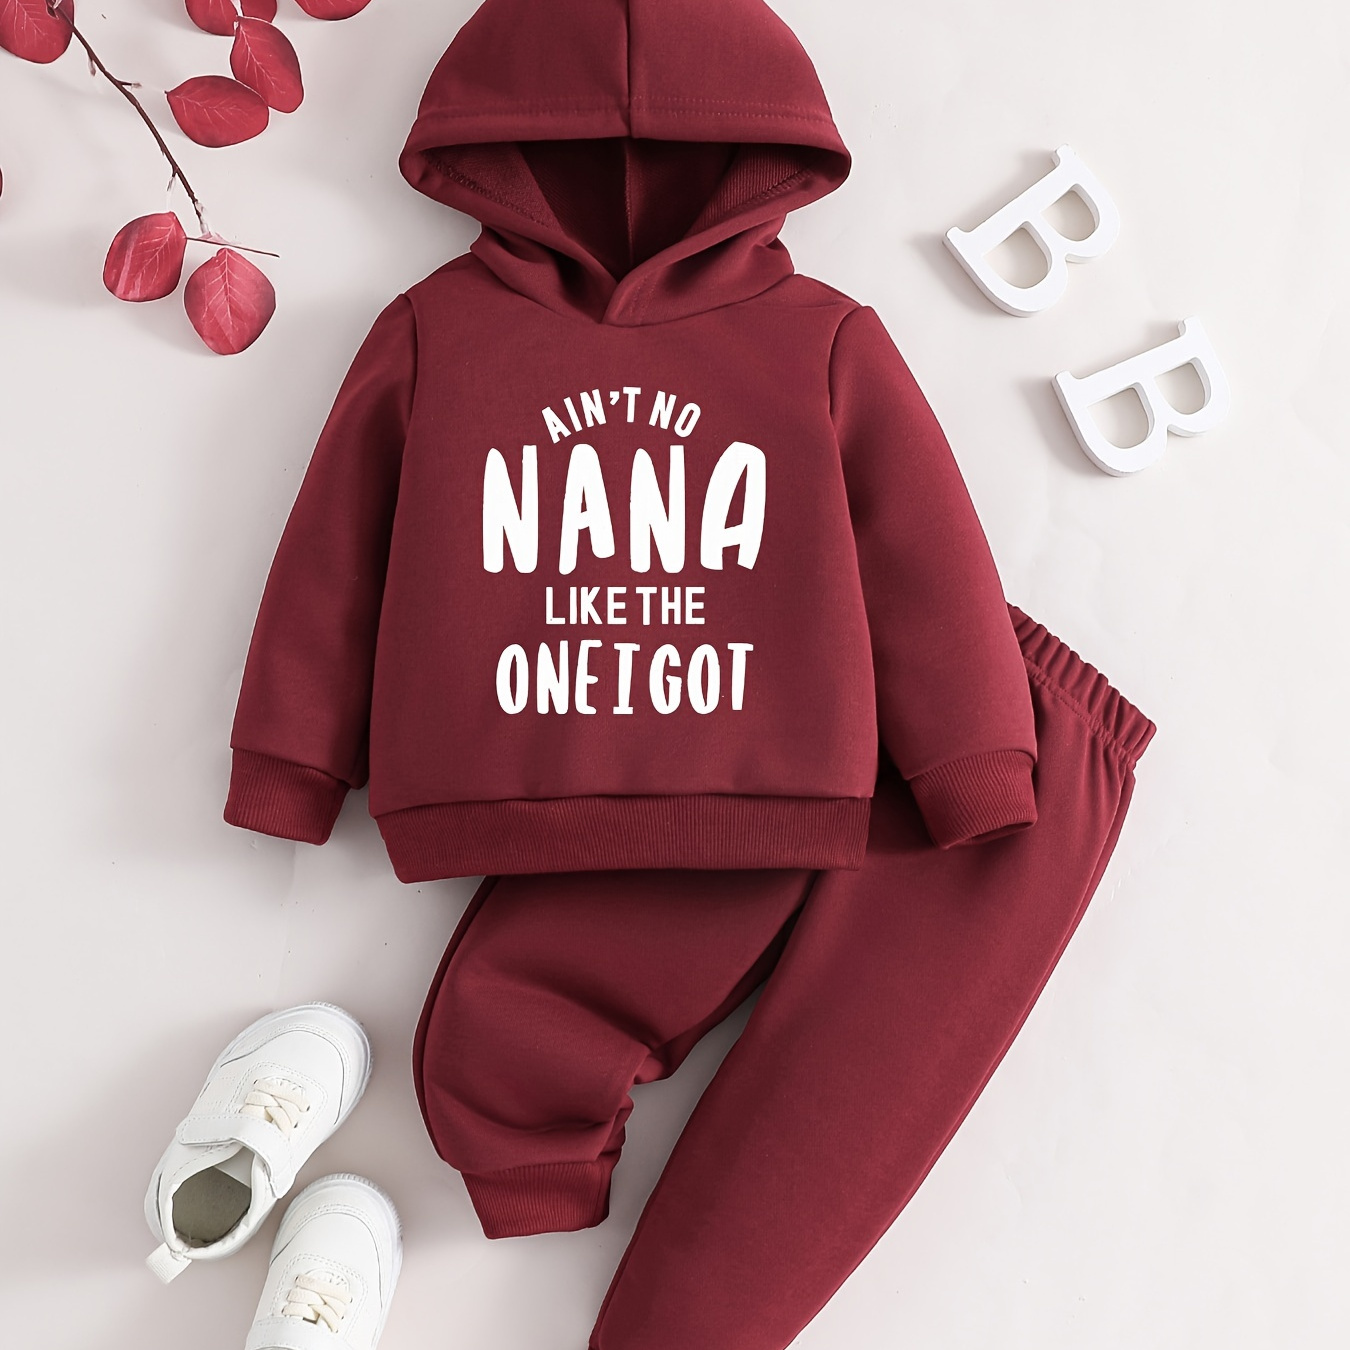 

2pcs Boy's "ain't No Nana Like The 1 I Got" Print Hooded Outfit, Warm Fleece Hoodie & Pants Set, Kid's Clothes For Fall Winter, As Gift